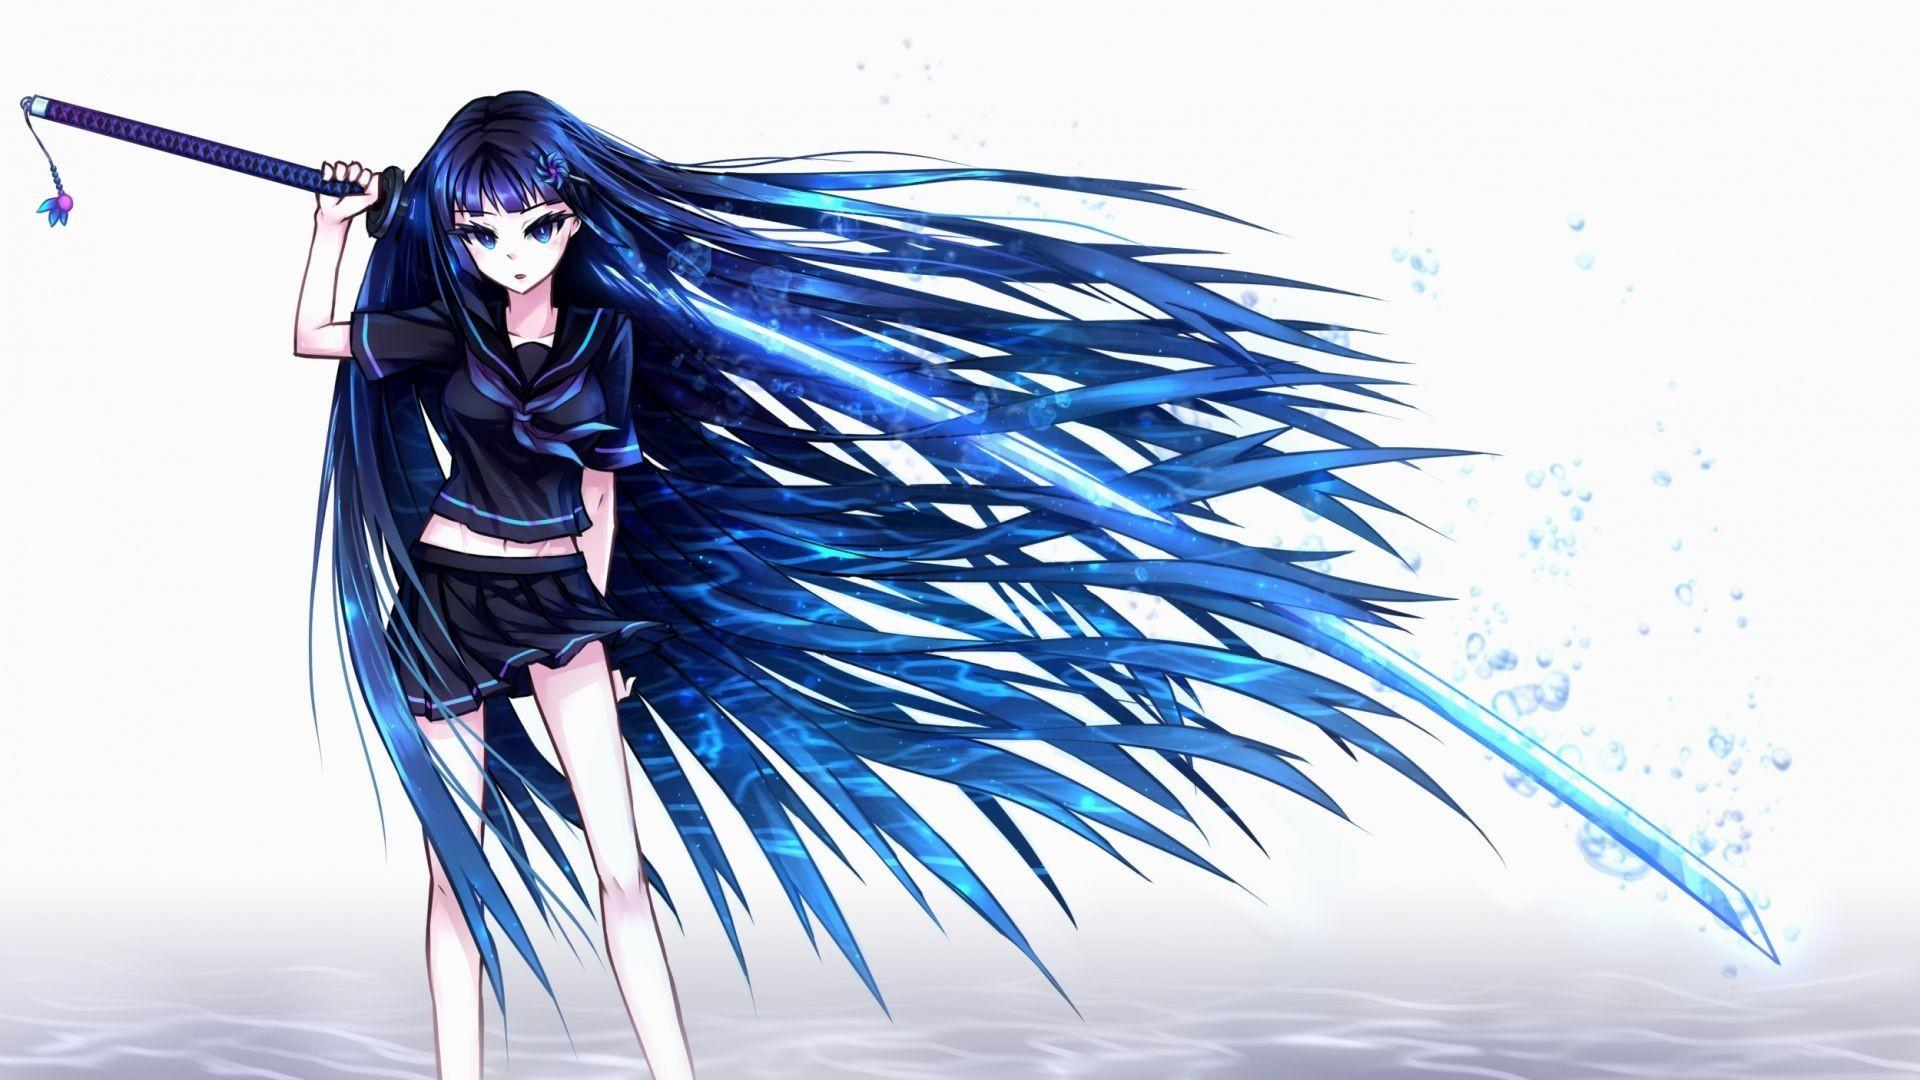 anime girl with blue hair and sword